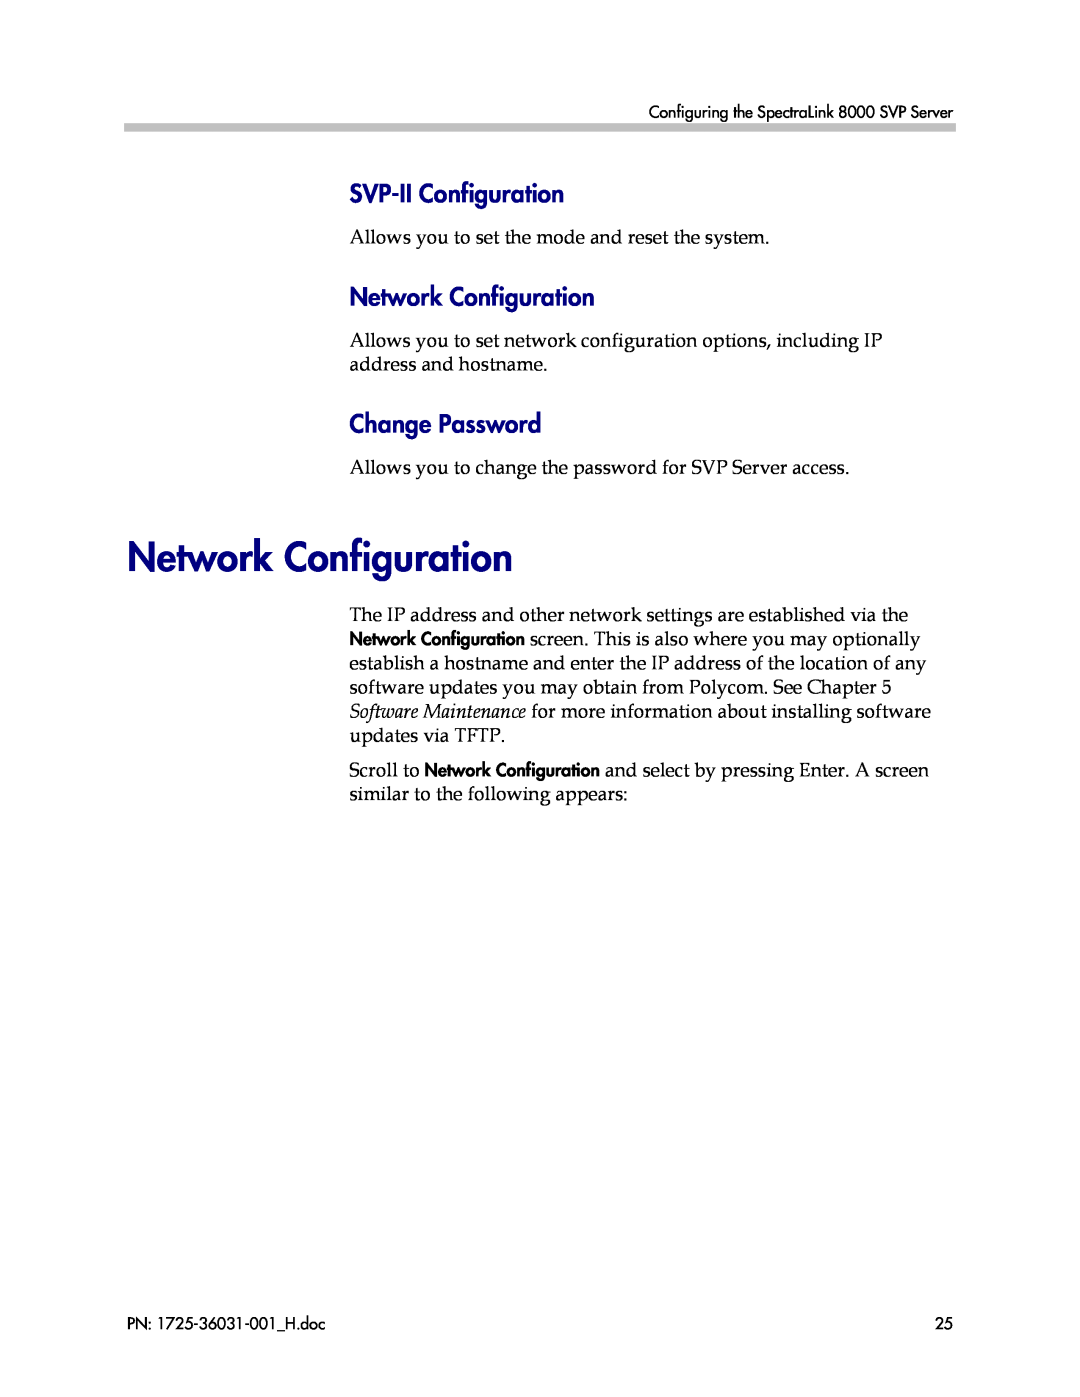 Polycom 1725-36031-001, VP010 manual Network Configuration, SVP-II Configuration, Change Password 